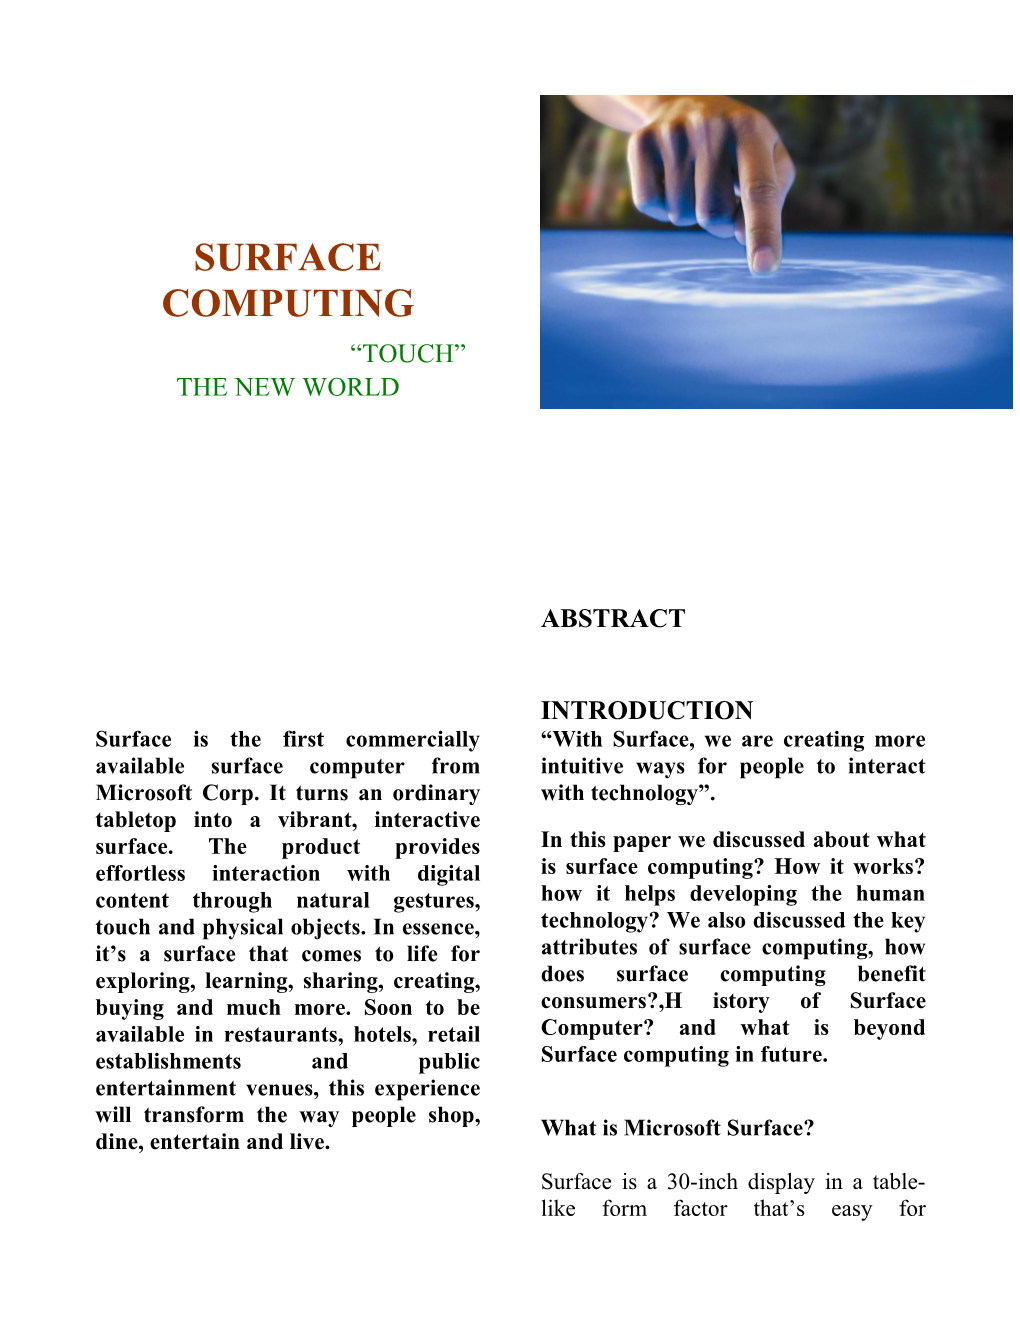 Surface Computing